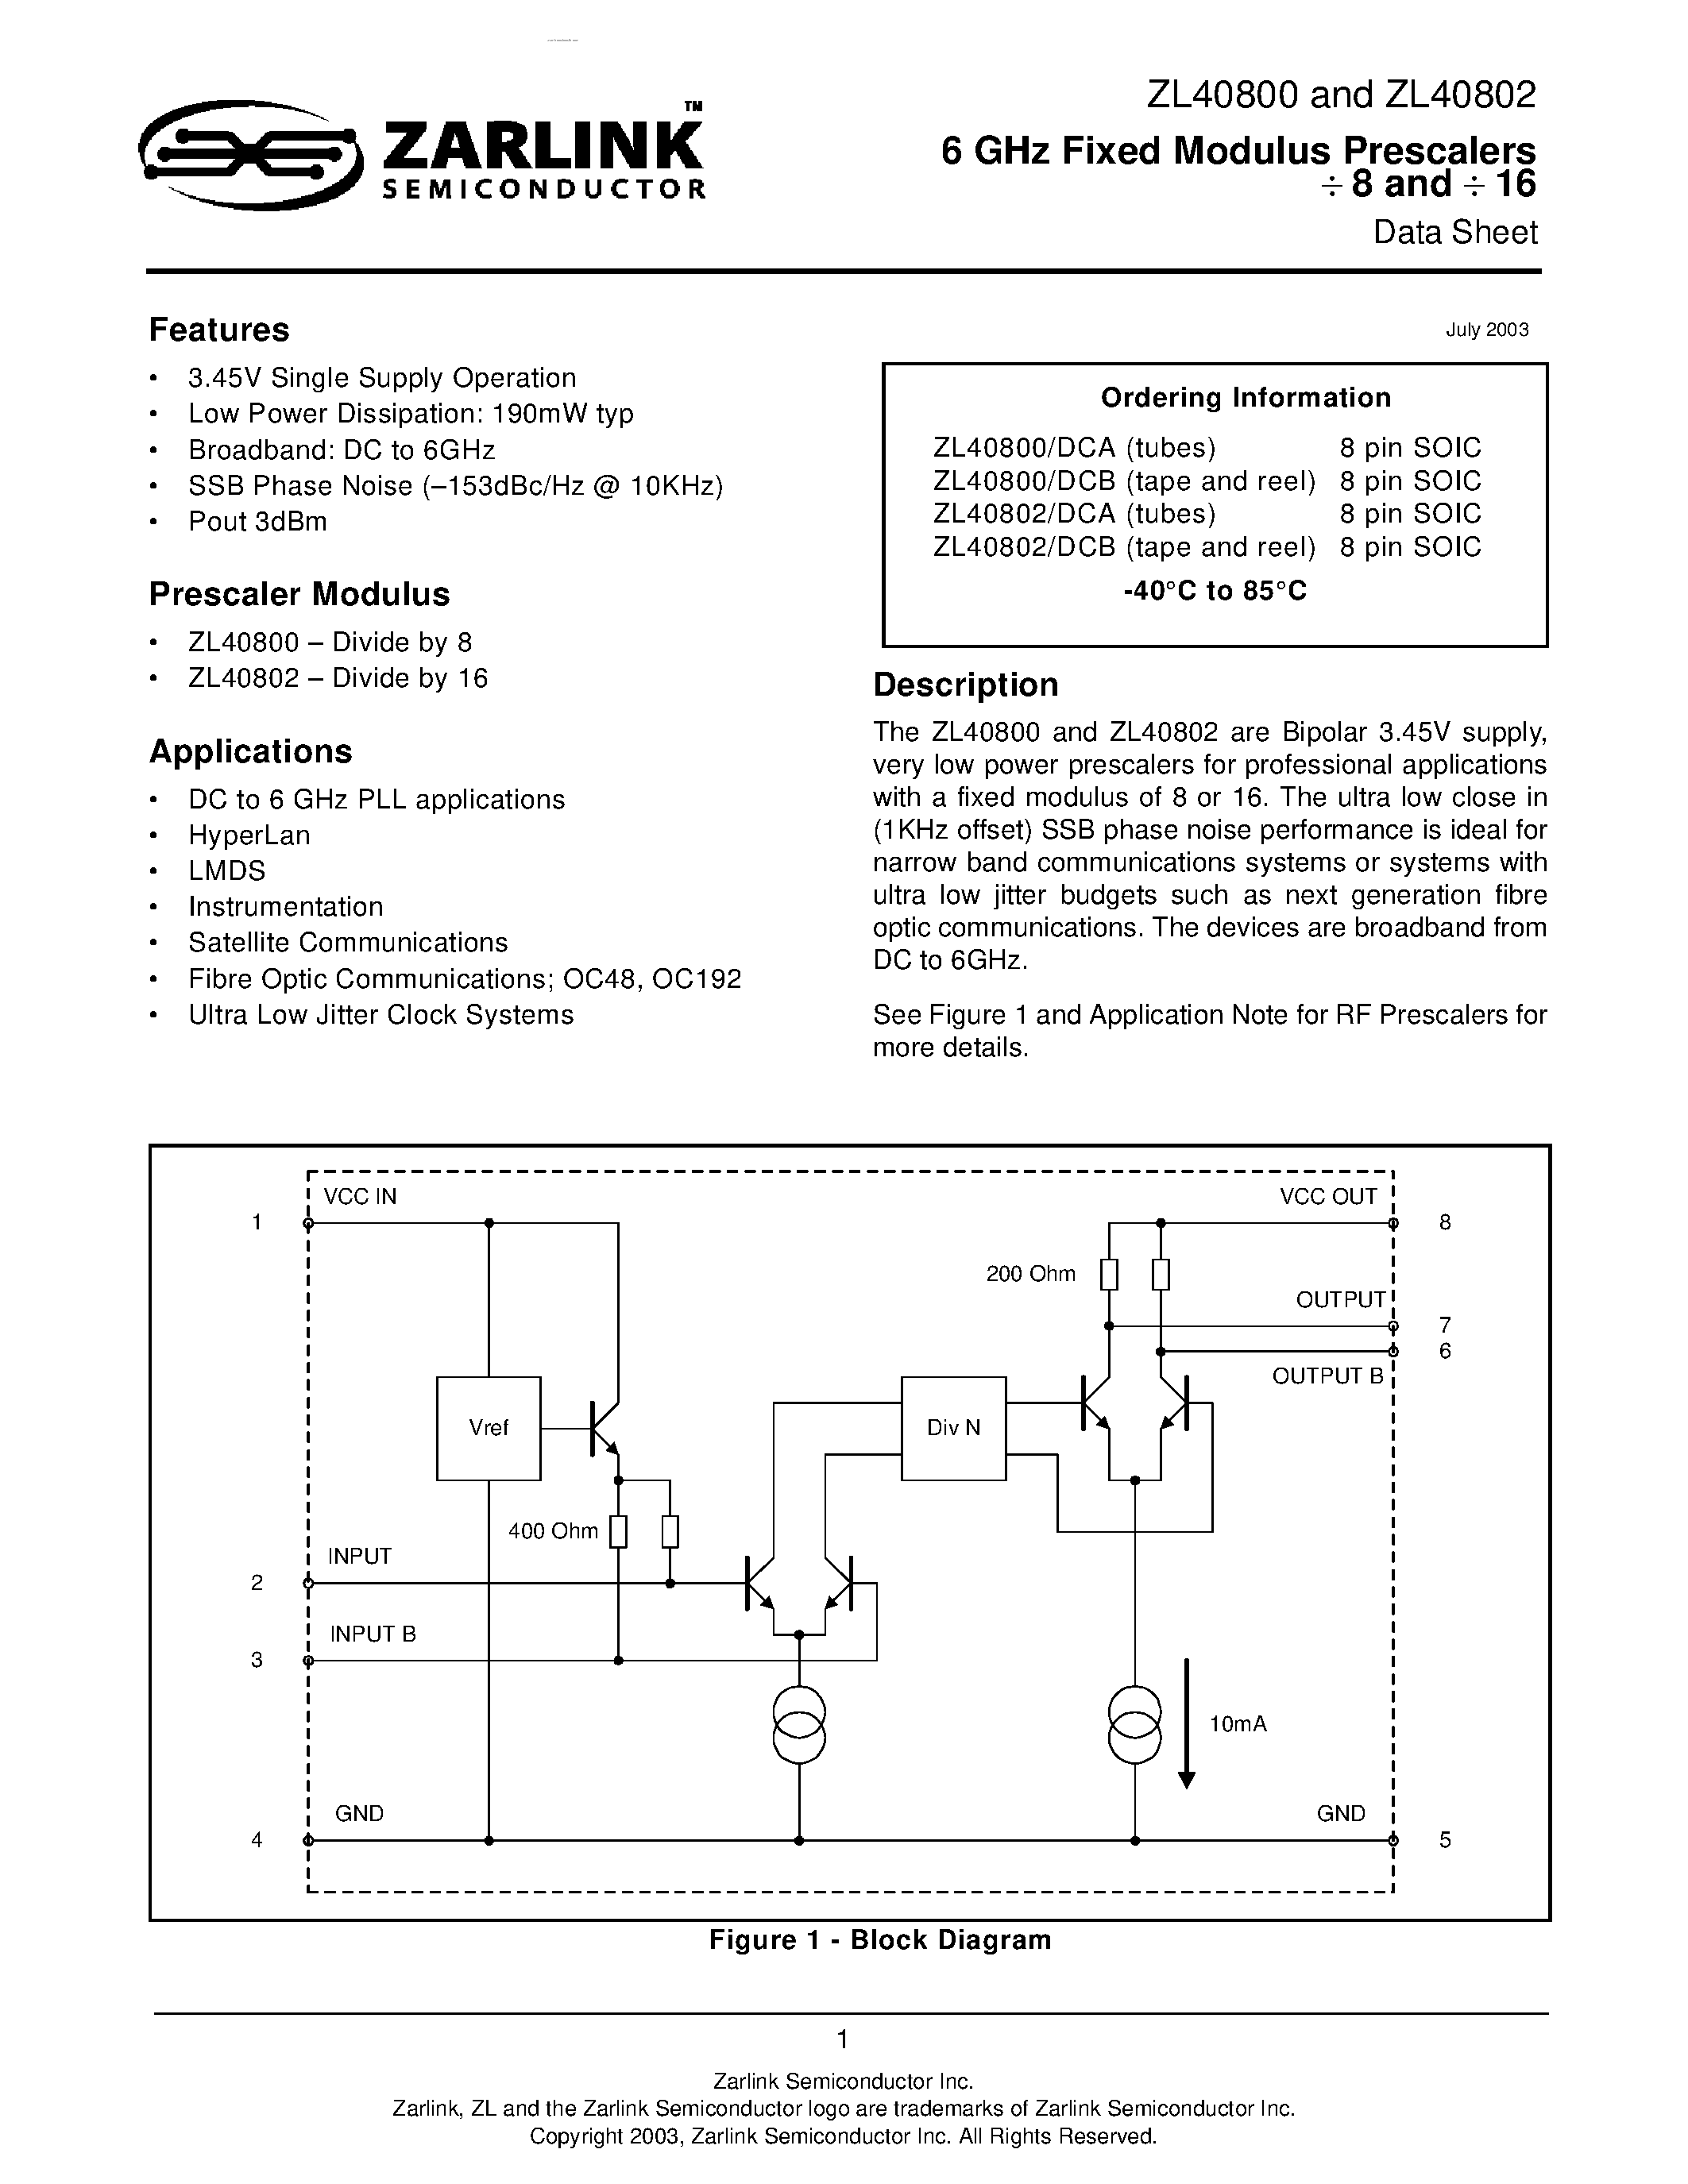 Datasheet ZL40800 - (ZL40800 / ZL40802) 6 GHz Fixed Modulus Prescalers page 1